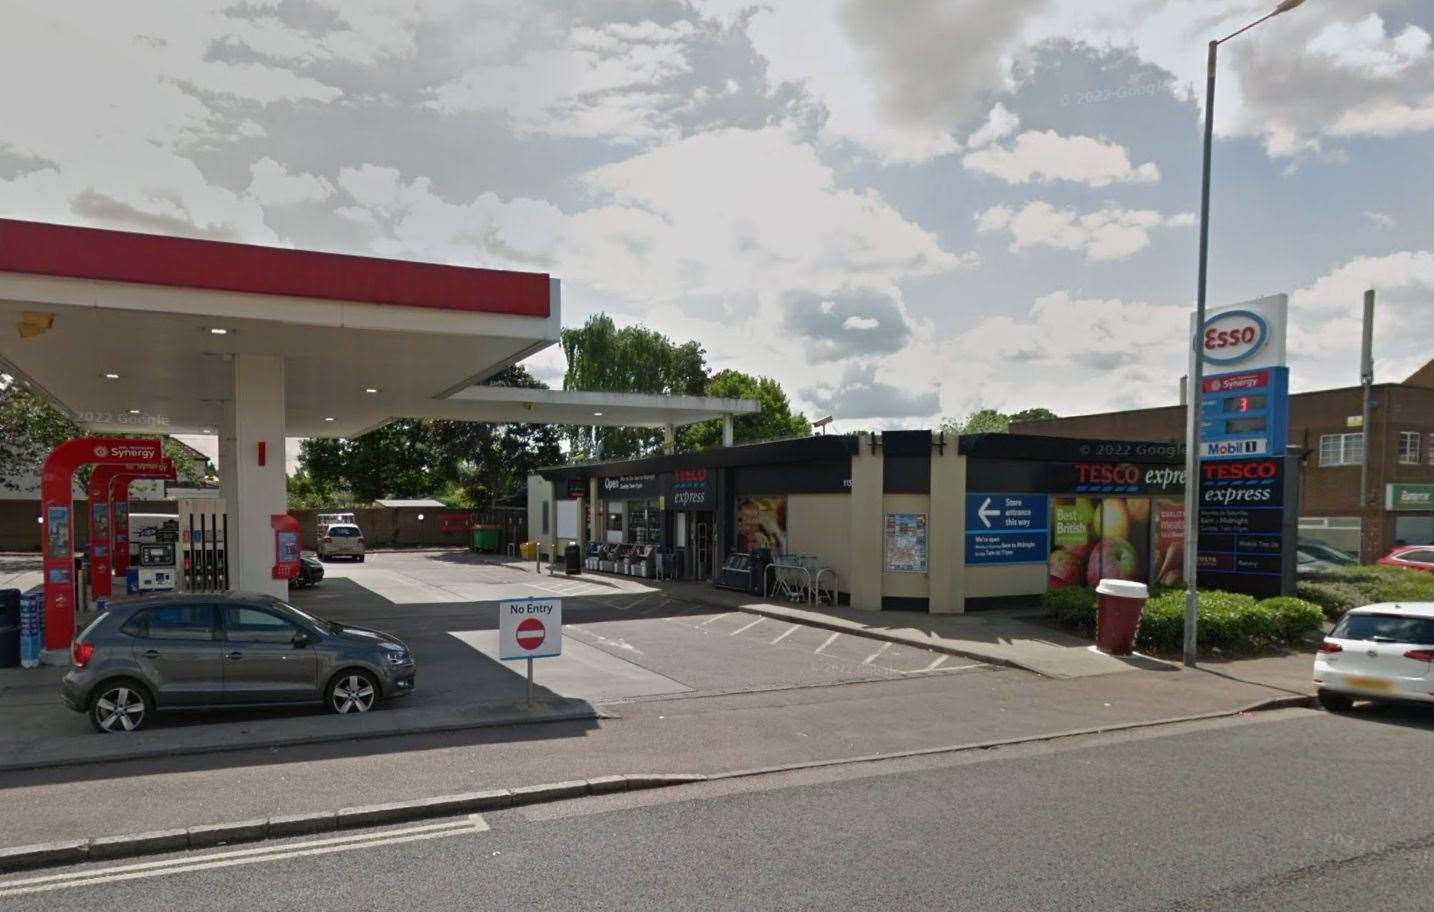 A person has died at the Esso garage in Dartford Road, Dartford. Picture: Google